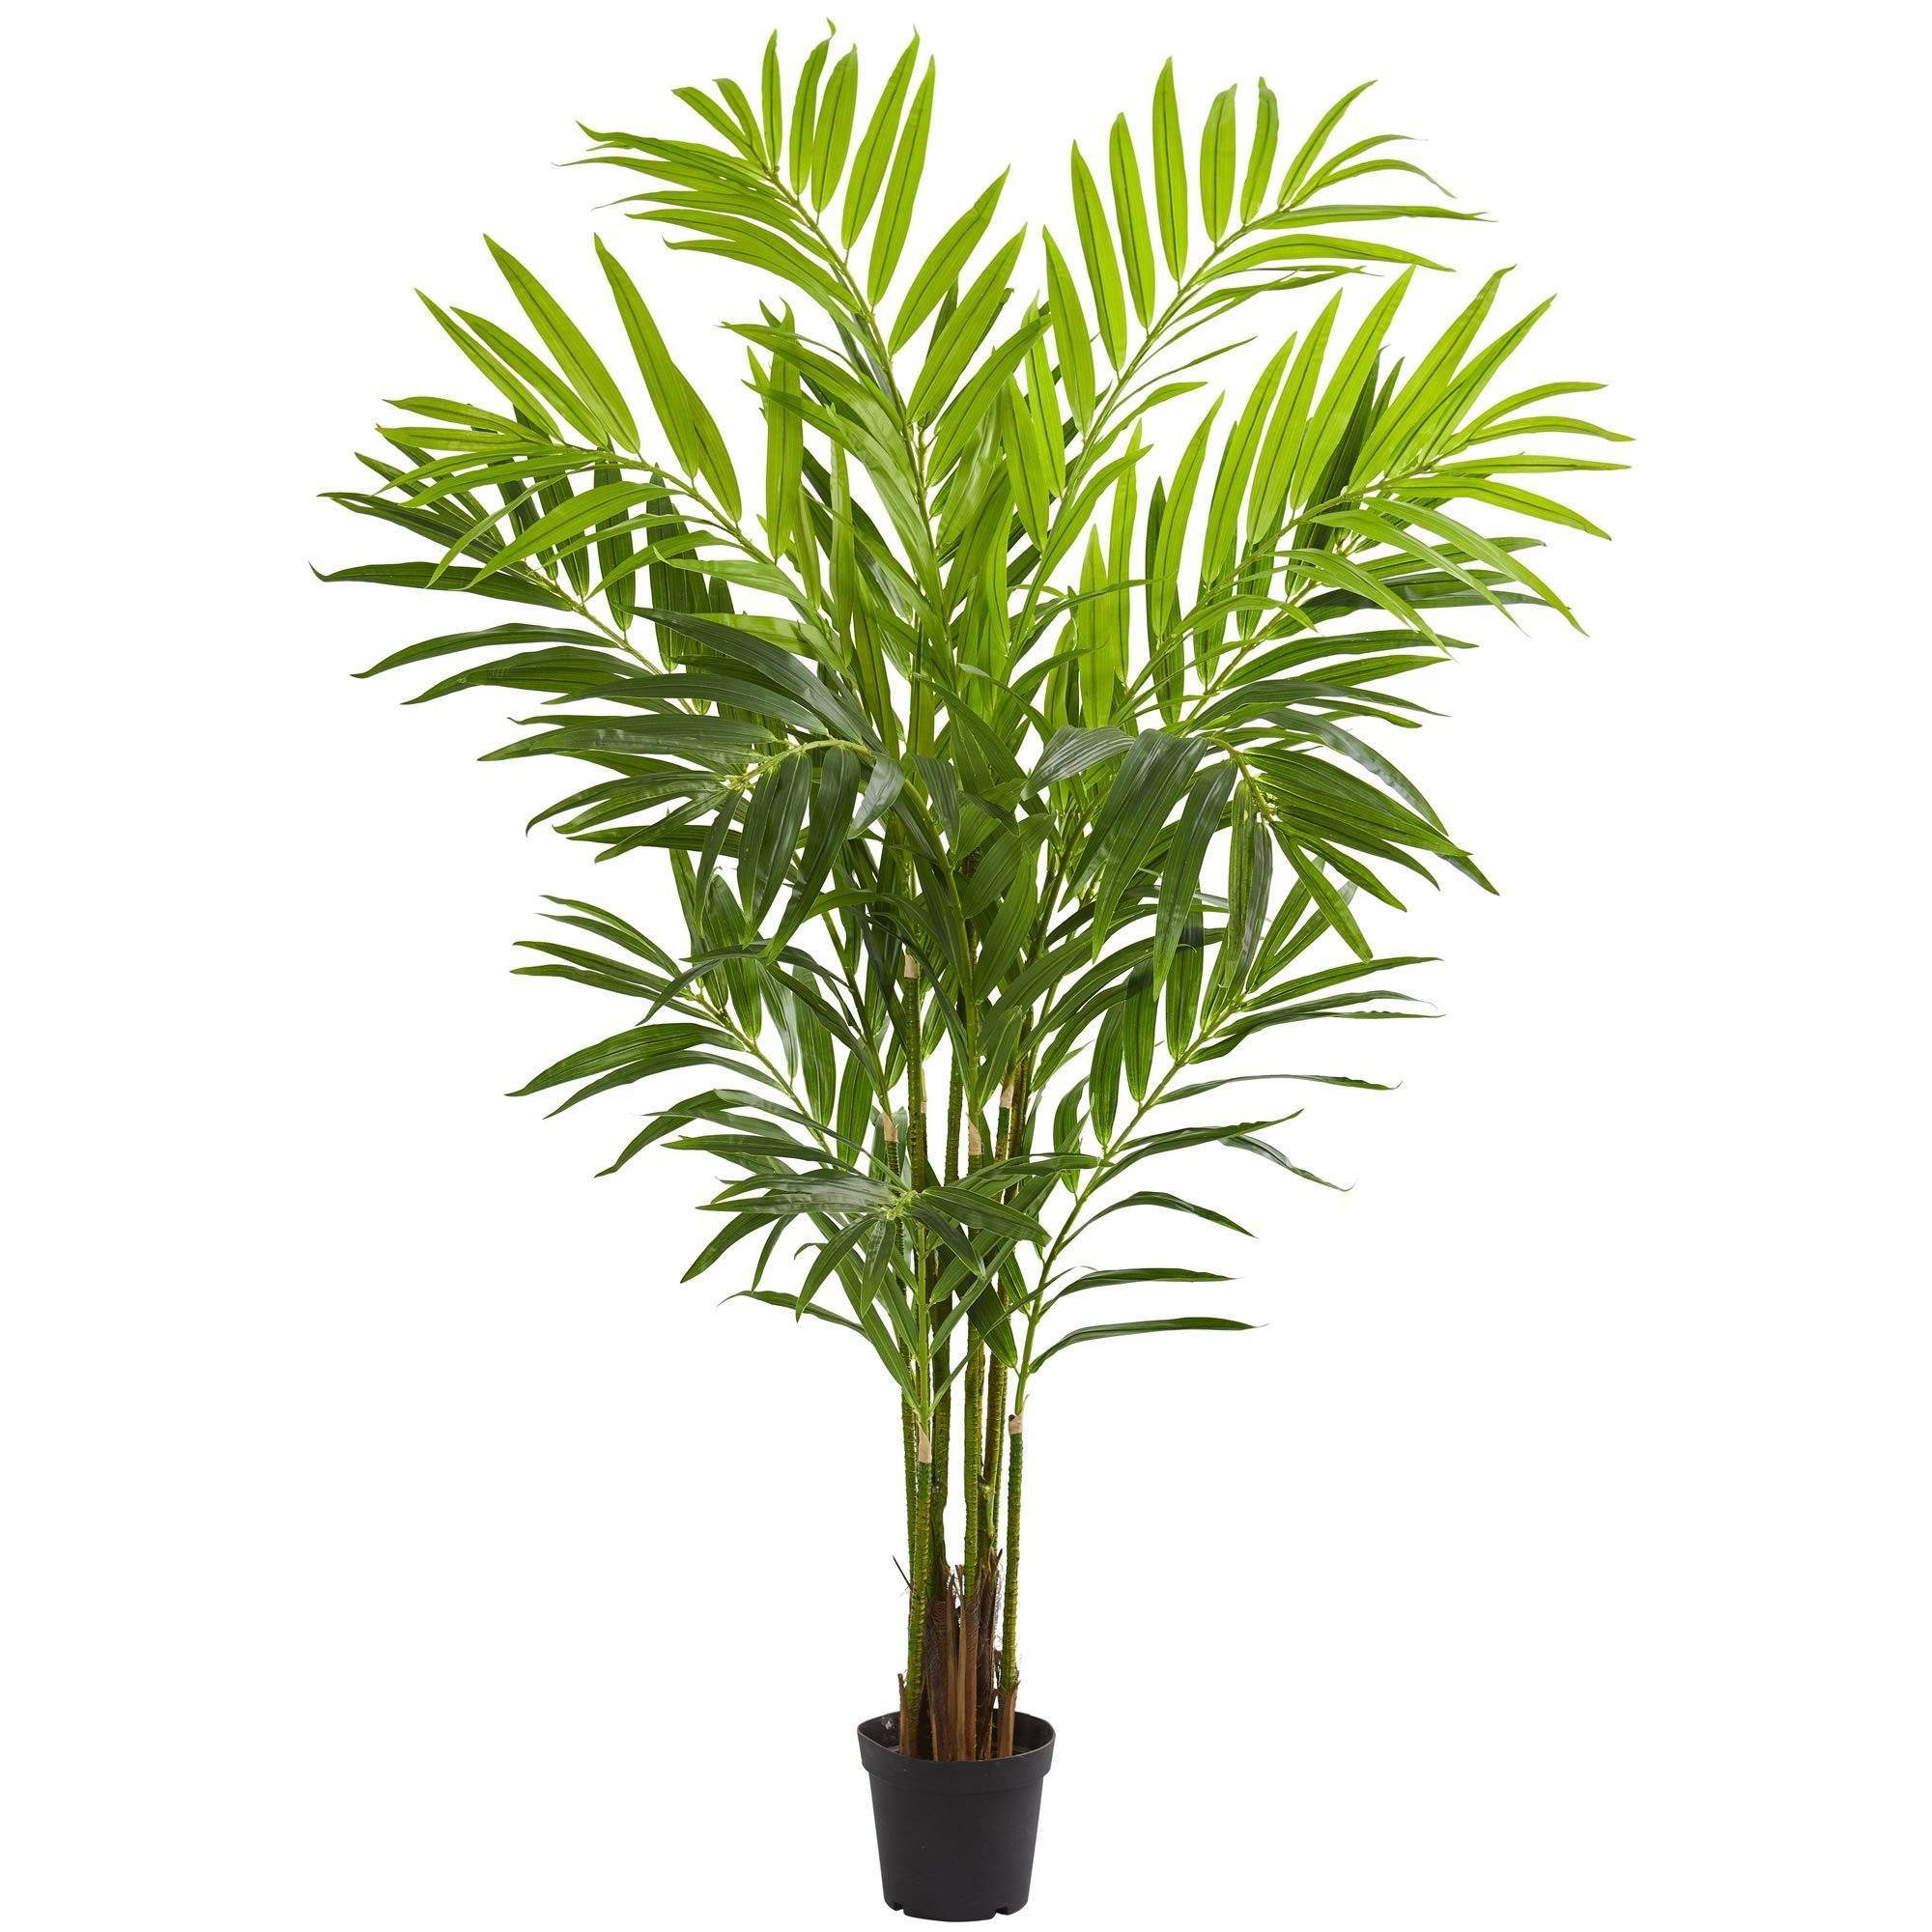 king palm